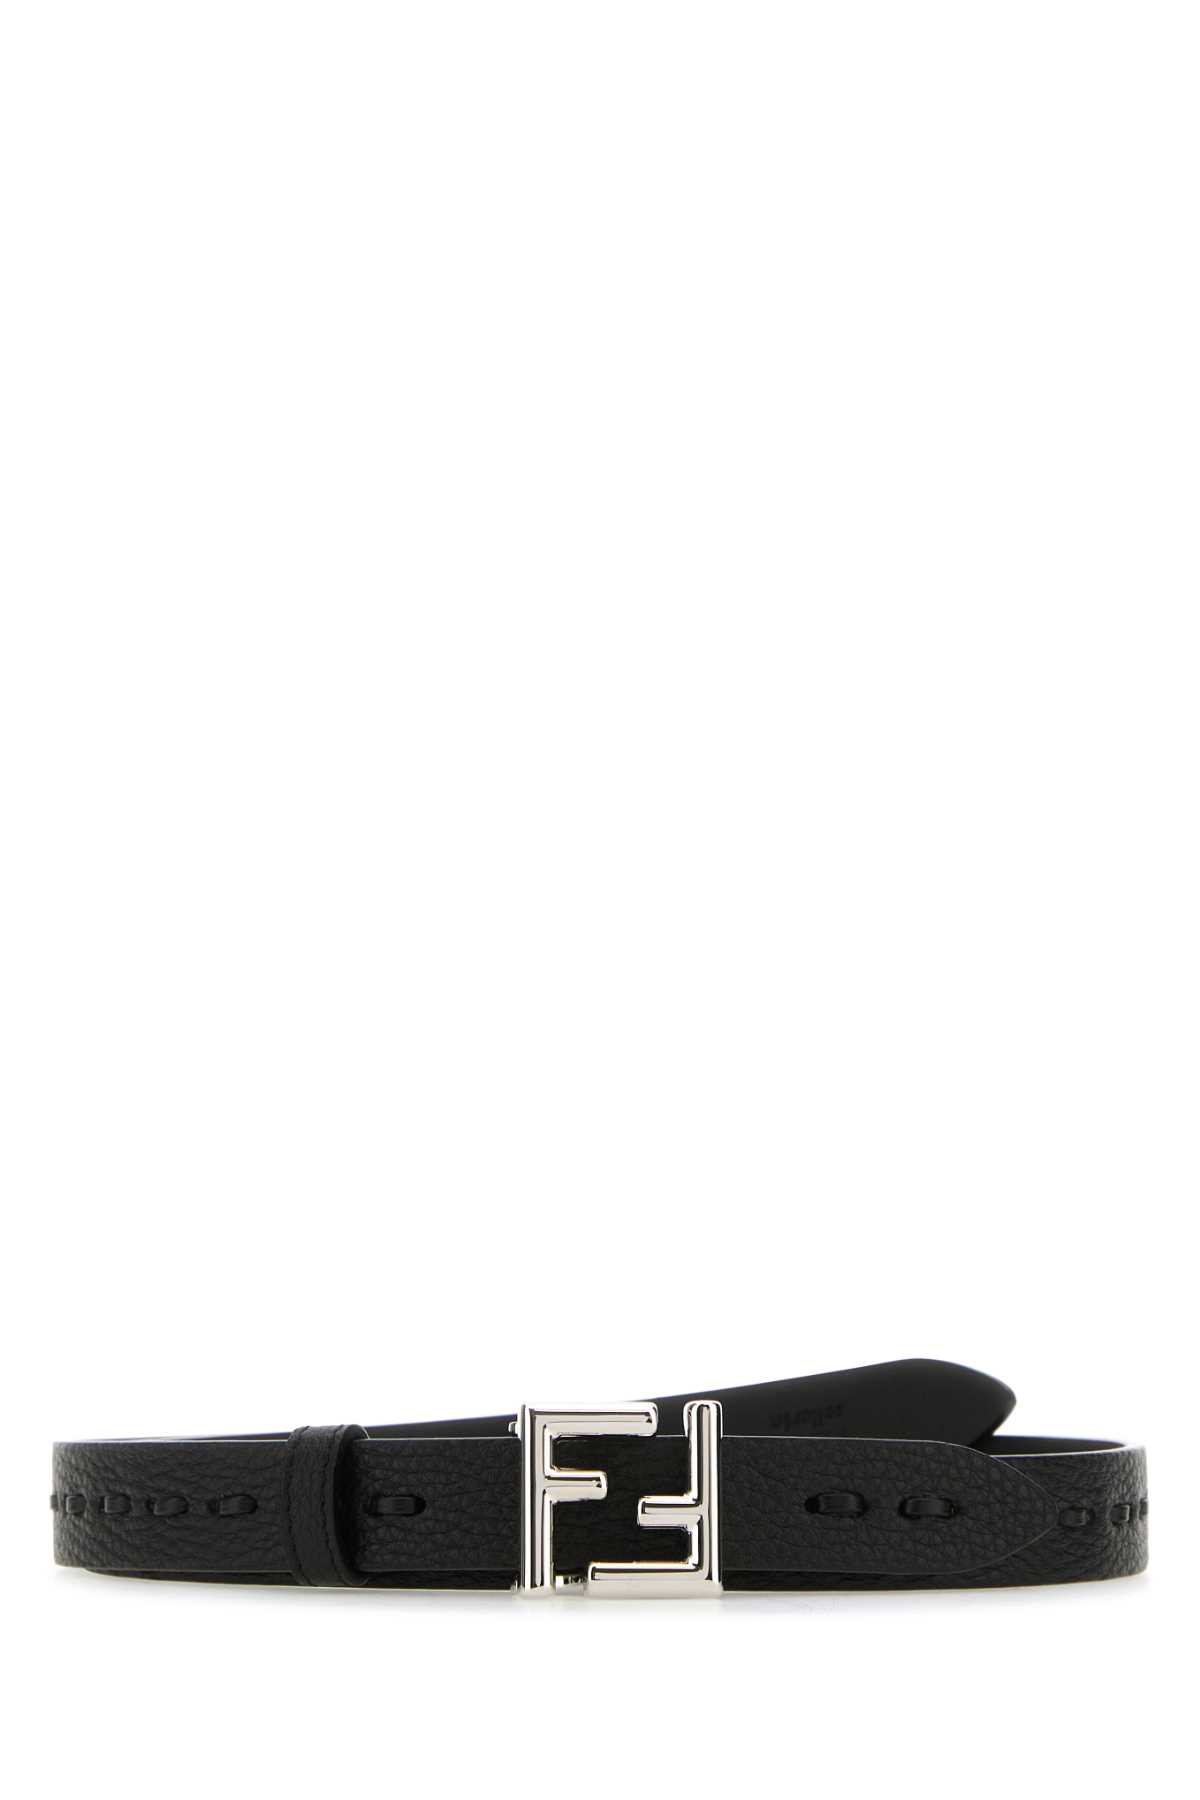 Fendi Black Leather Belt In Gray